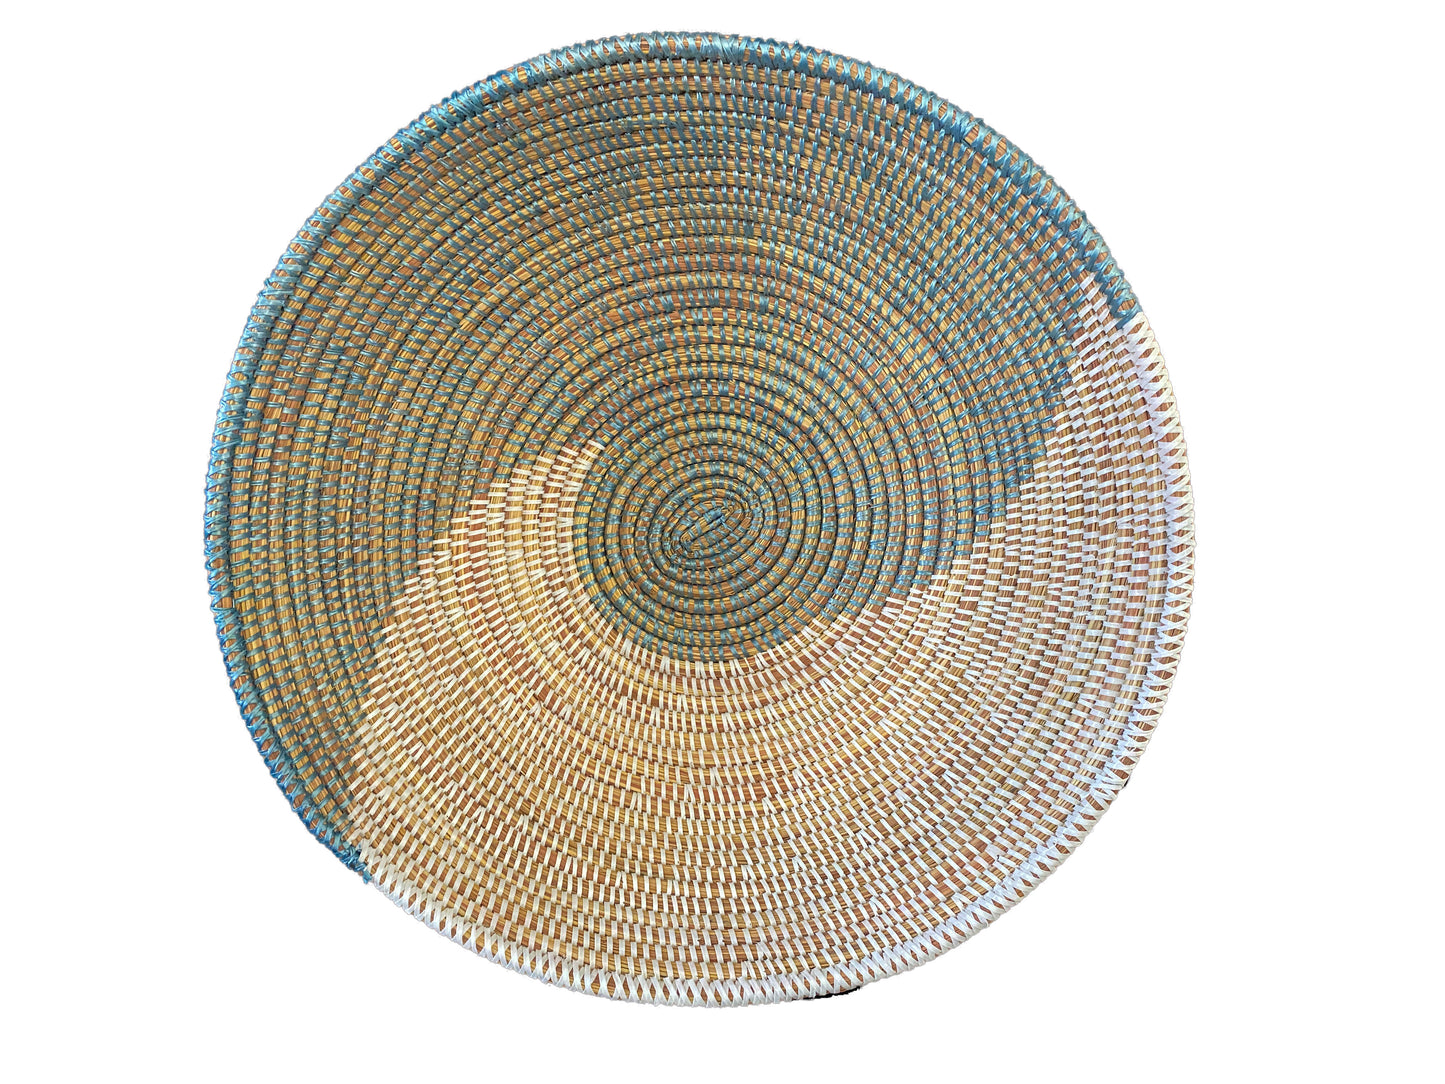 #3479 Handmade Woven Wolof Basket From Senegal 17" in Diameter